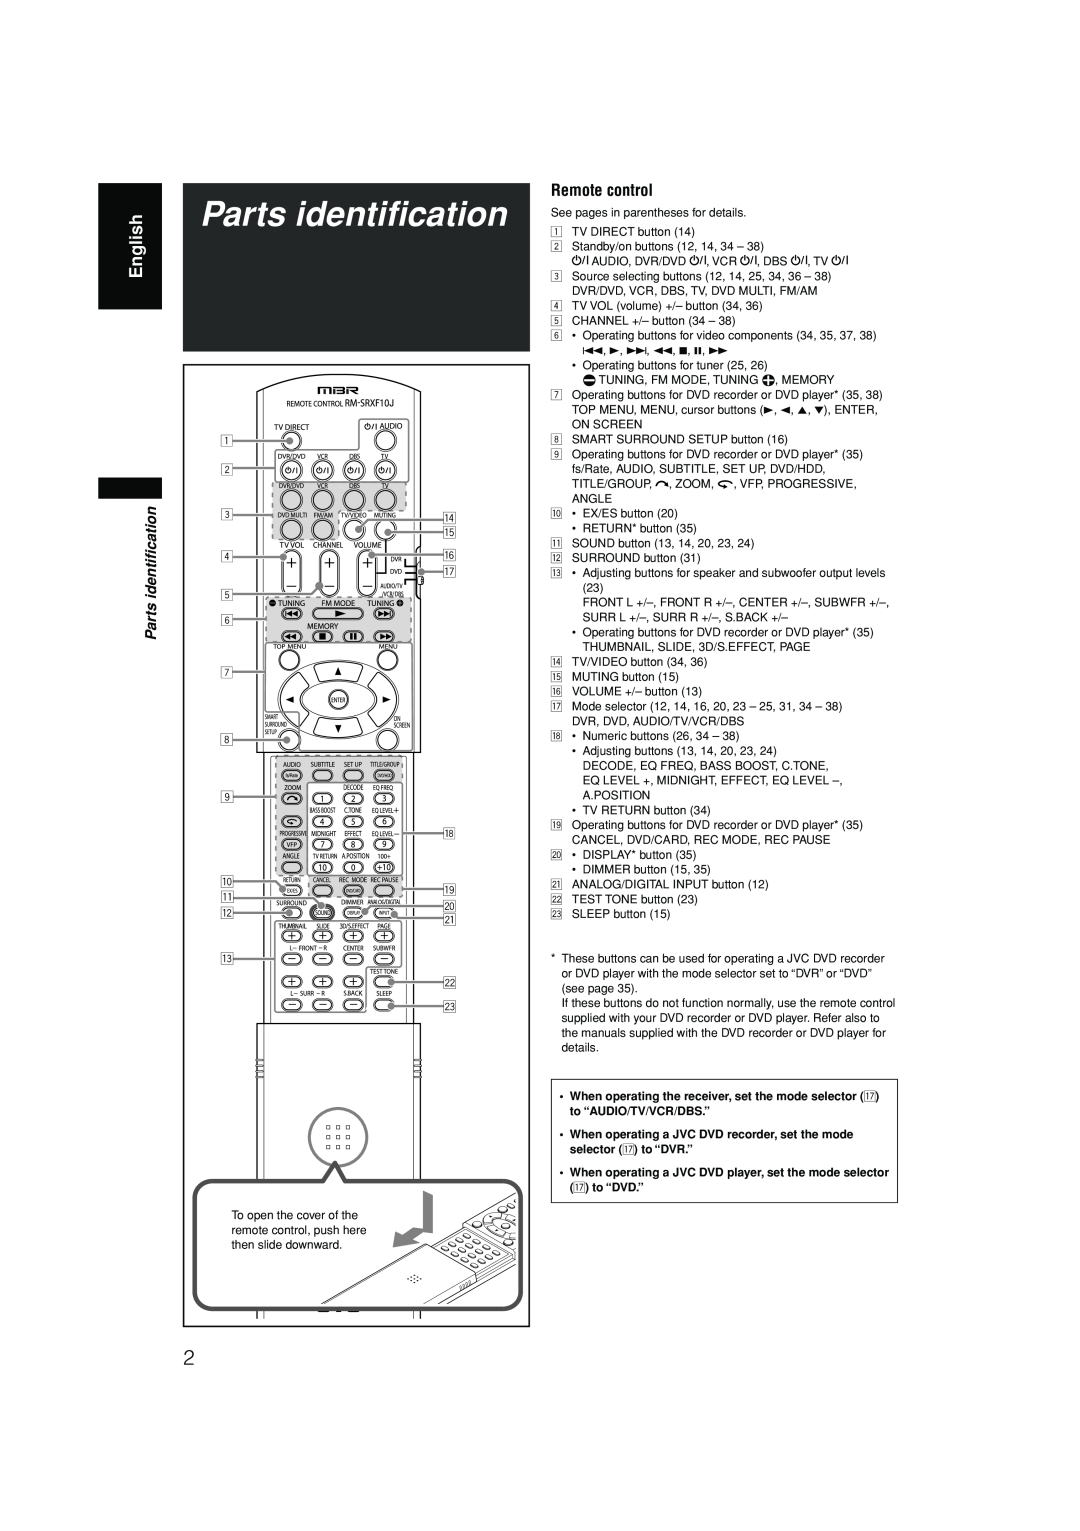 JVC RX-F10S manual Parts identification, English, Remote control 